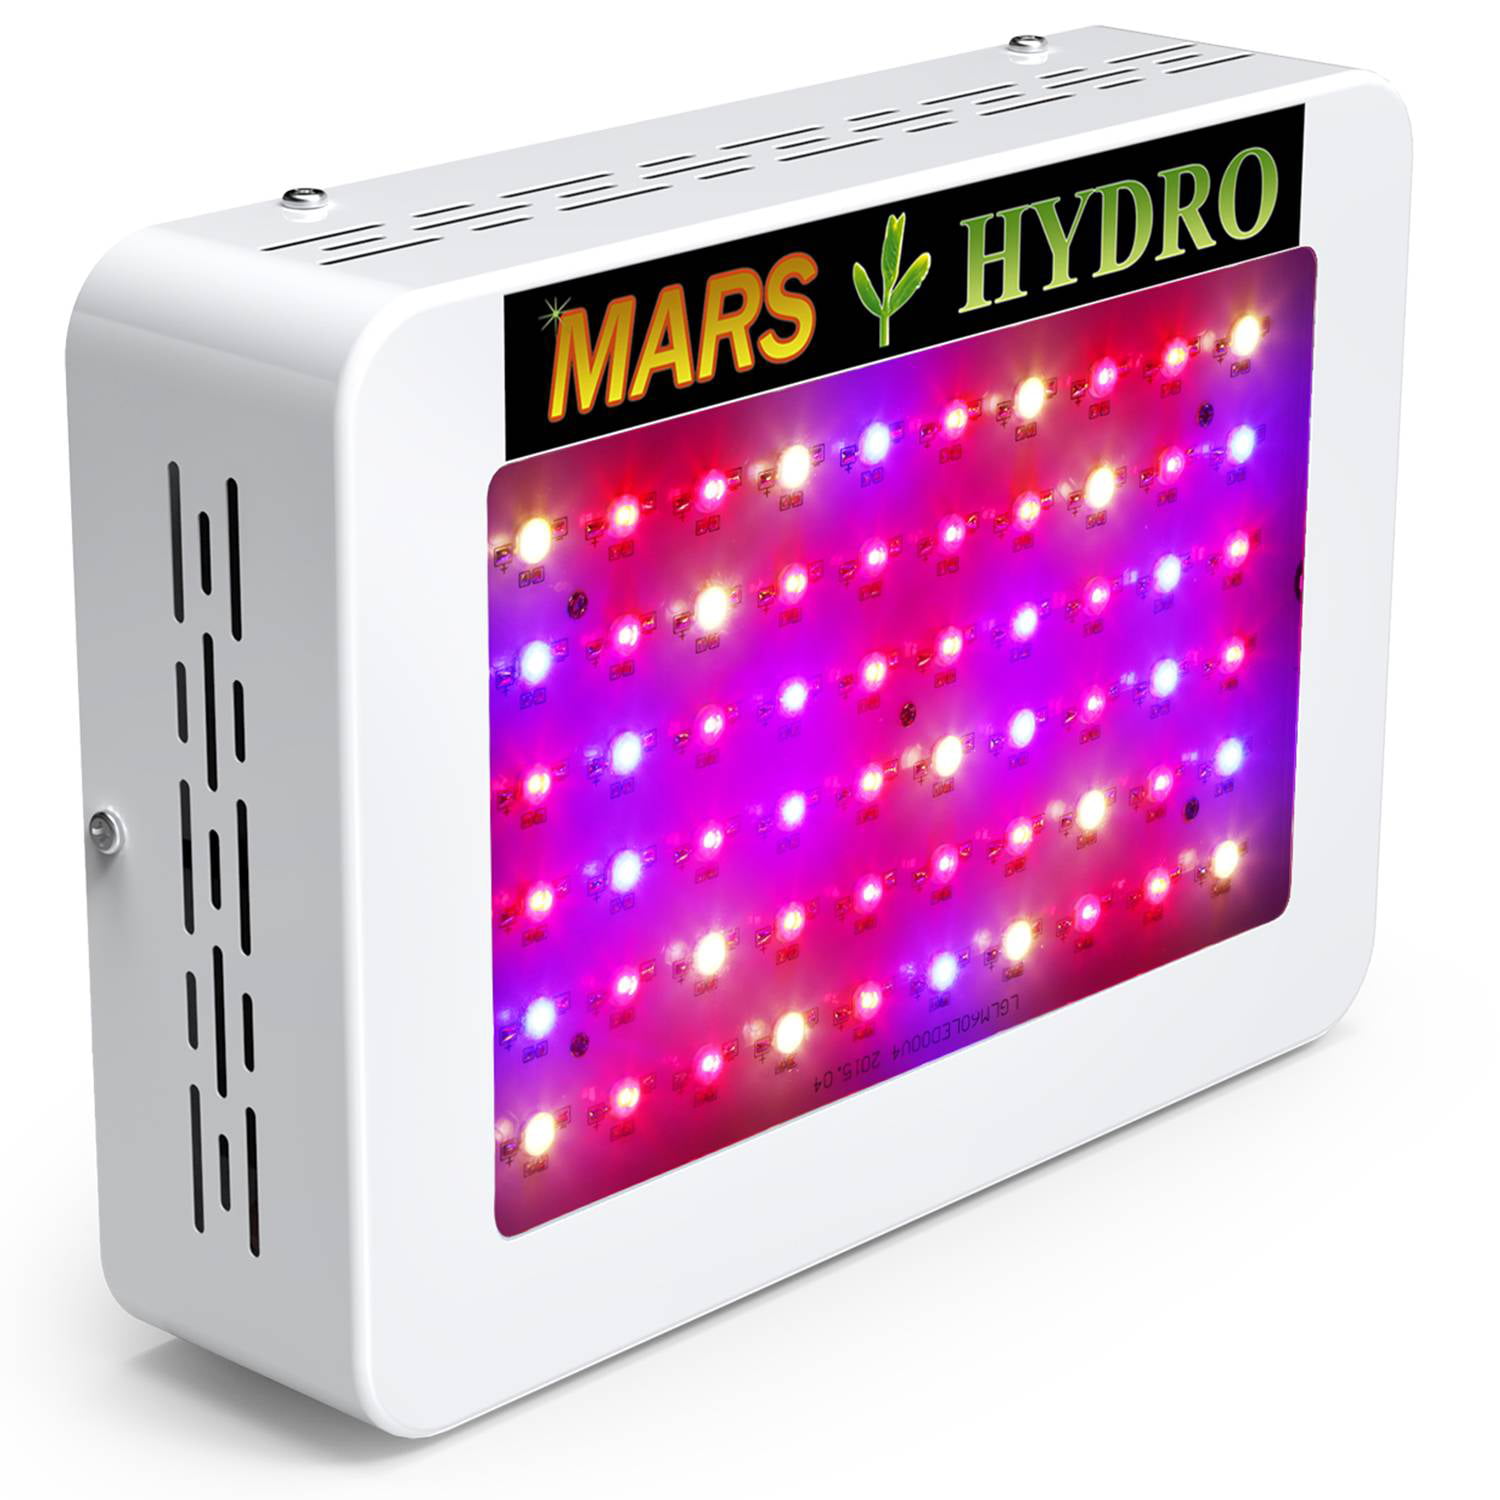 Led Grow Light Kits Mars Hydro 300W Full Spectrum Indoor Growing